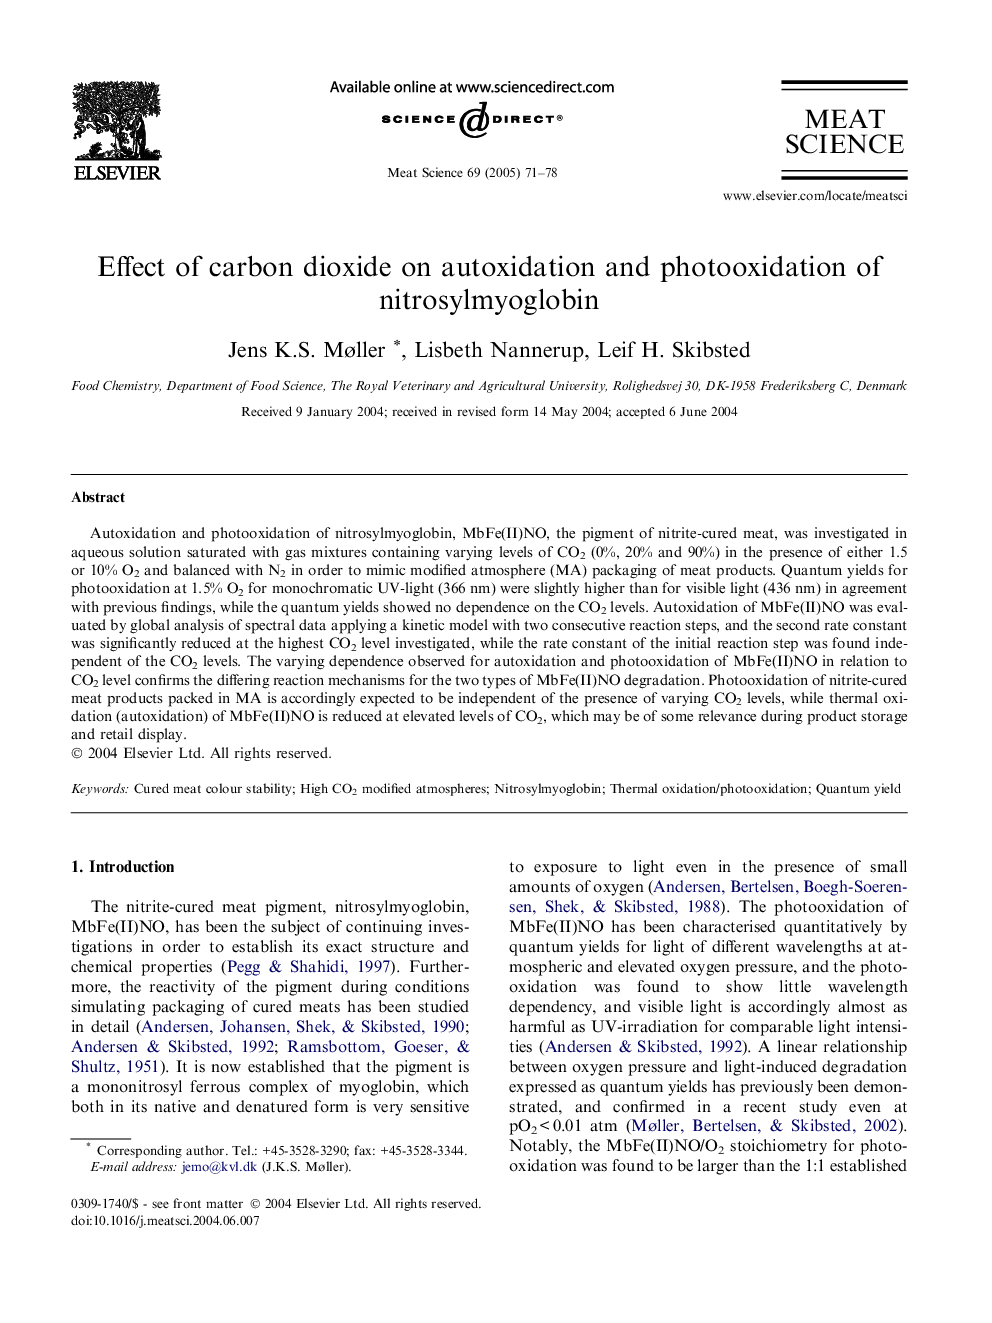 Effect of carbon dioxide on autoxidation and photooxidation of nitrosylmyoglobin